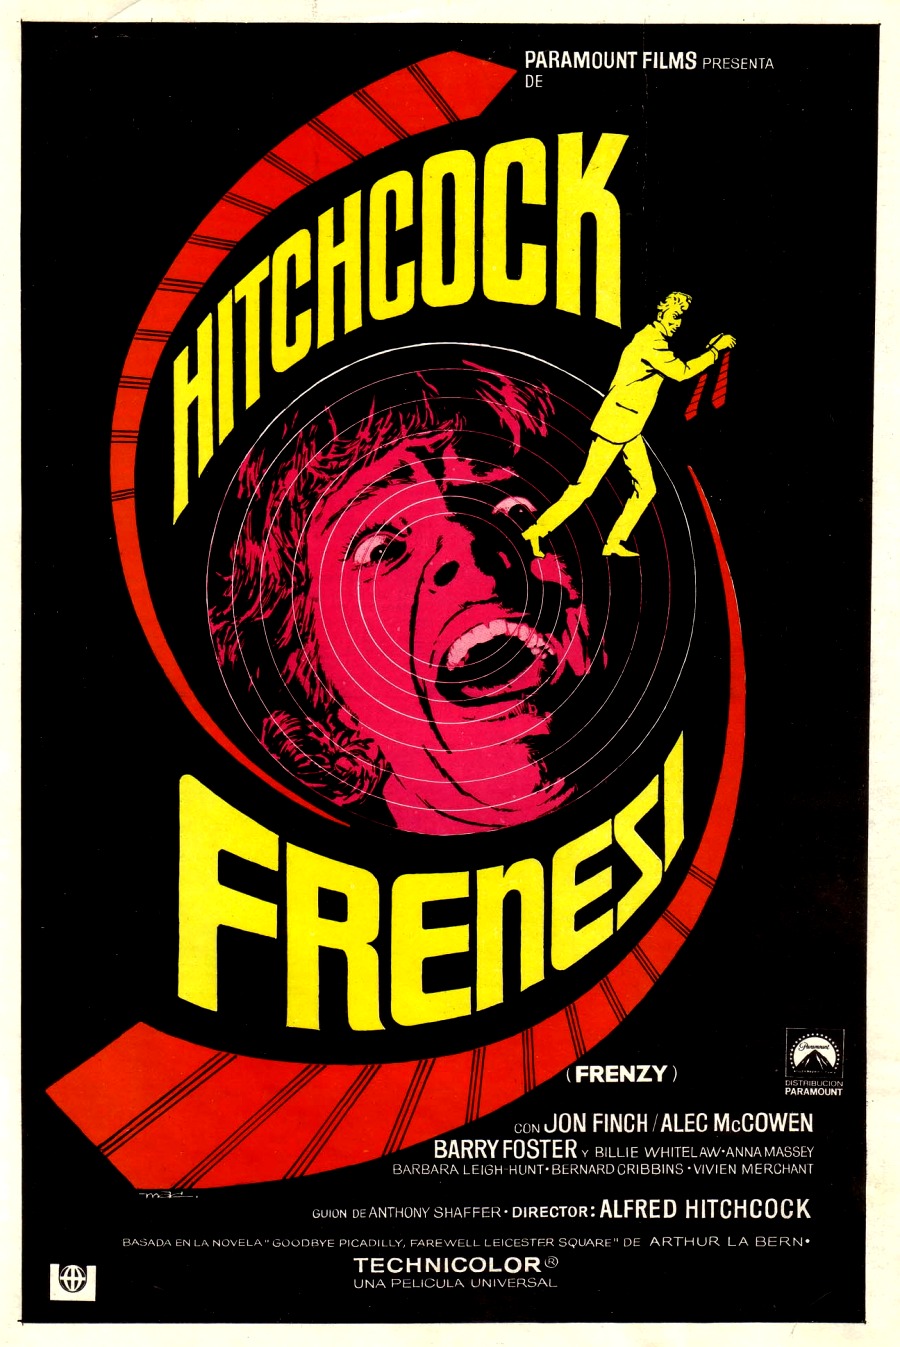 Frenzy Hitchcock